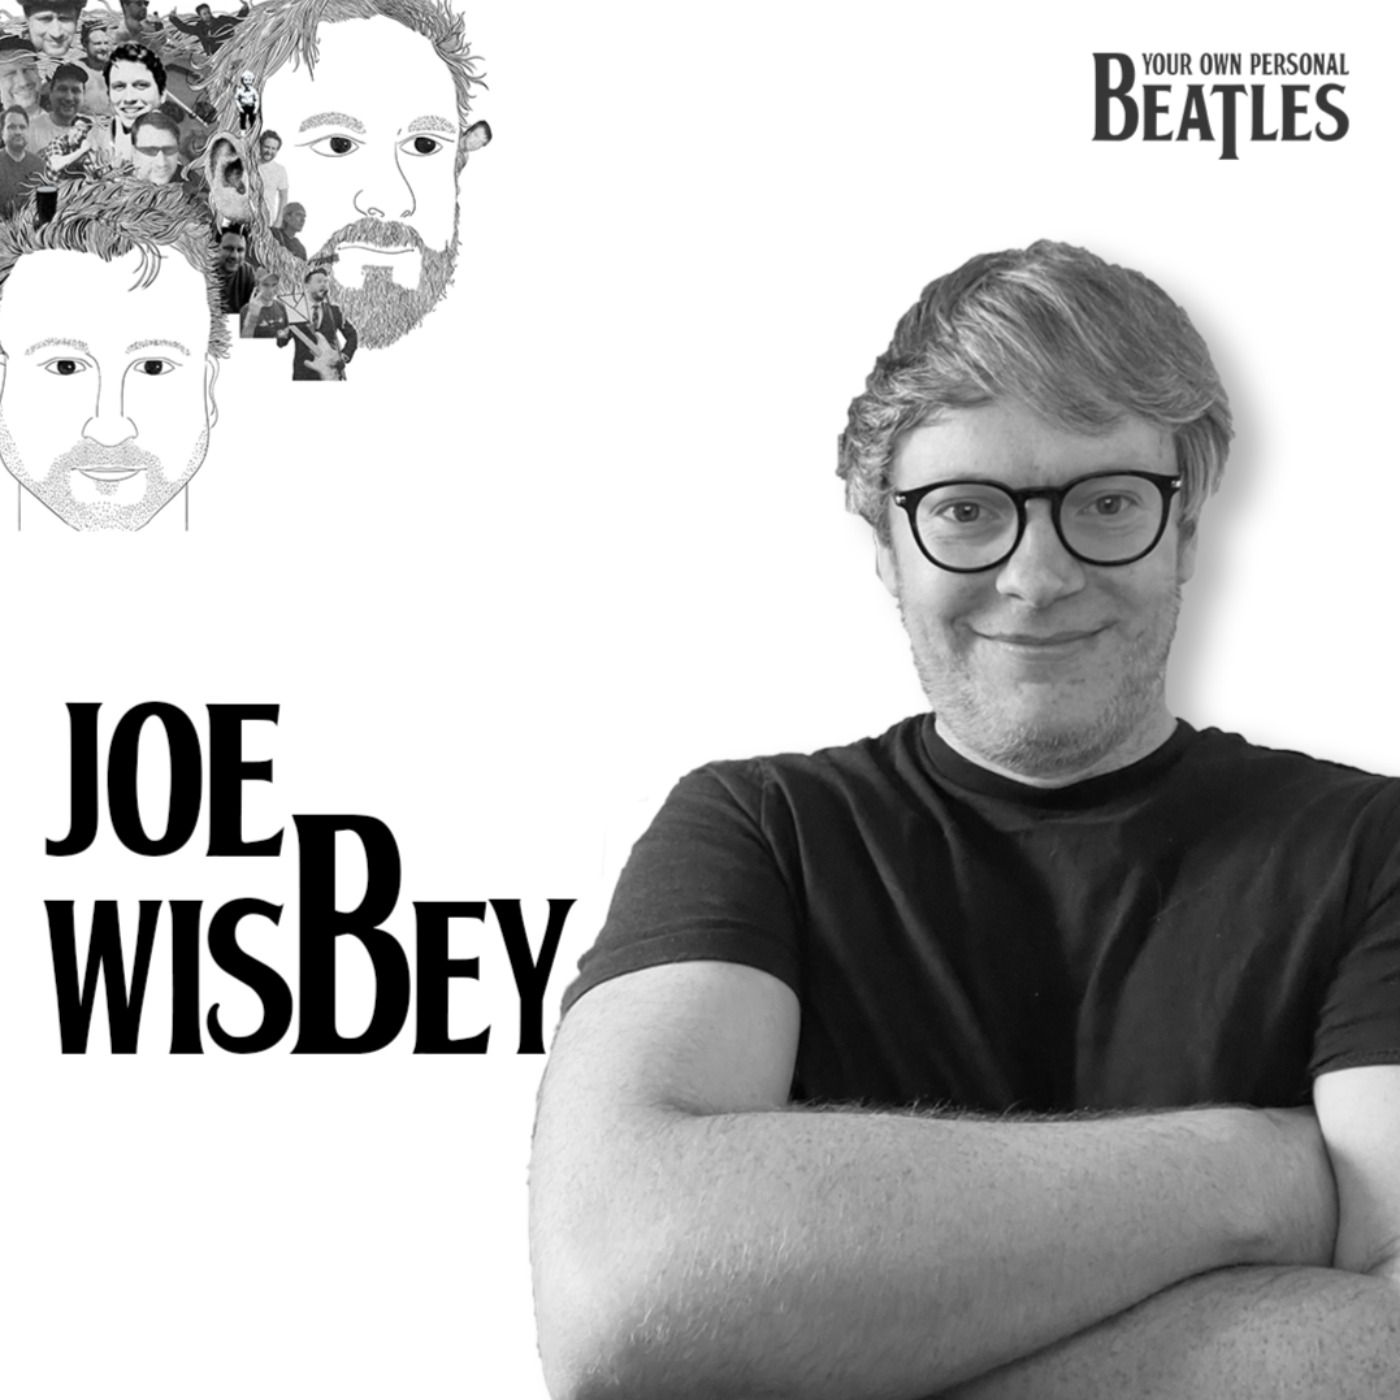 Joe Wisbey's Personal Beatles